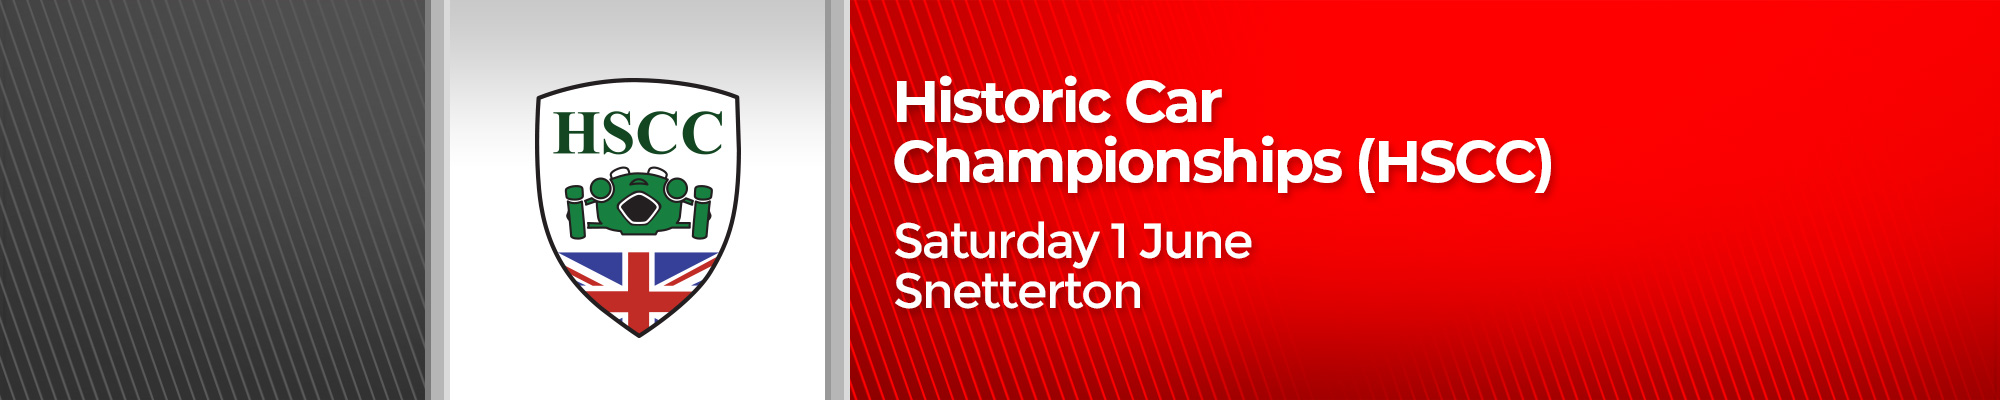 HSCC Historic Car Championships